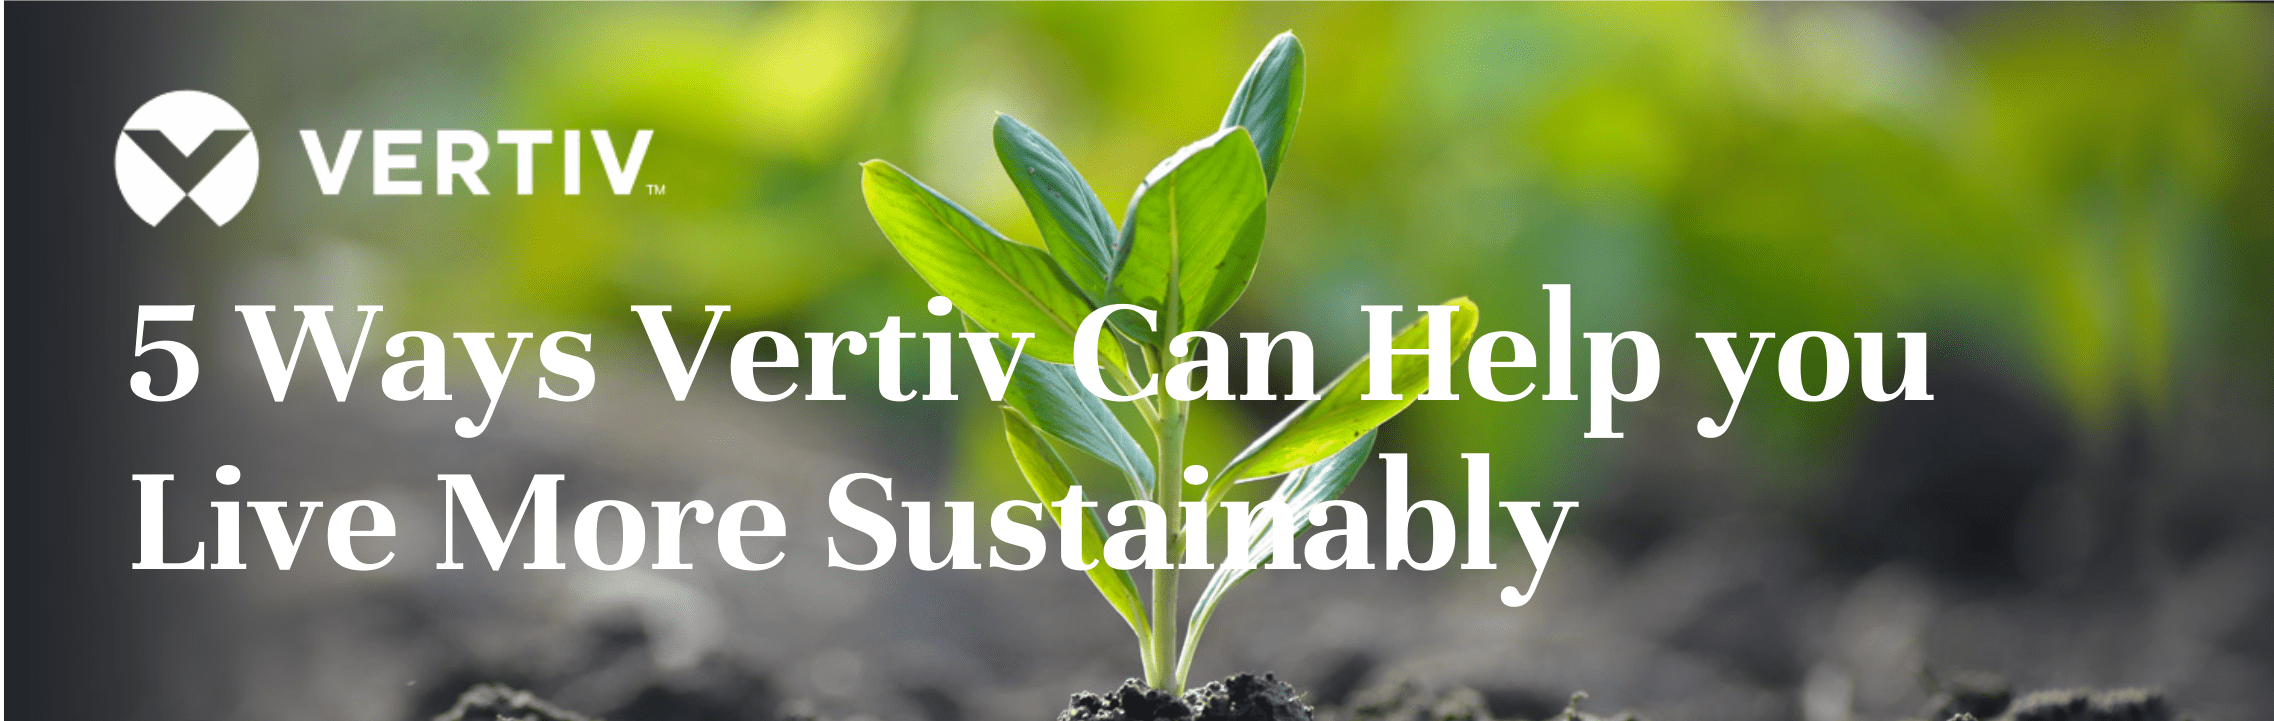 Vertiv 5 steps to sustainability header image